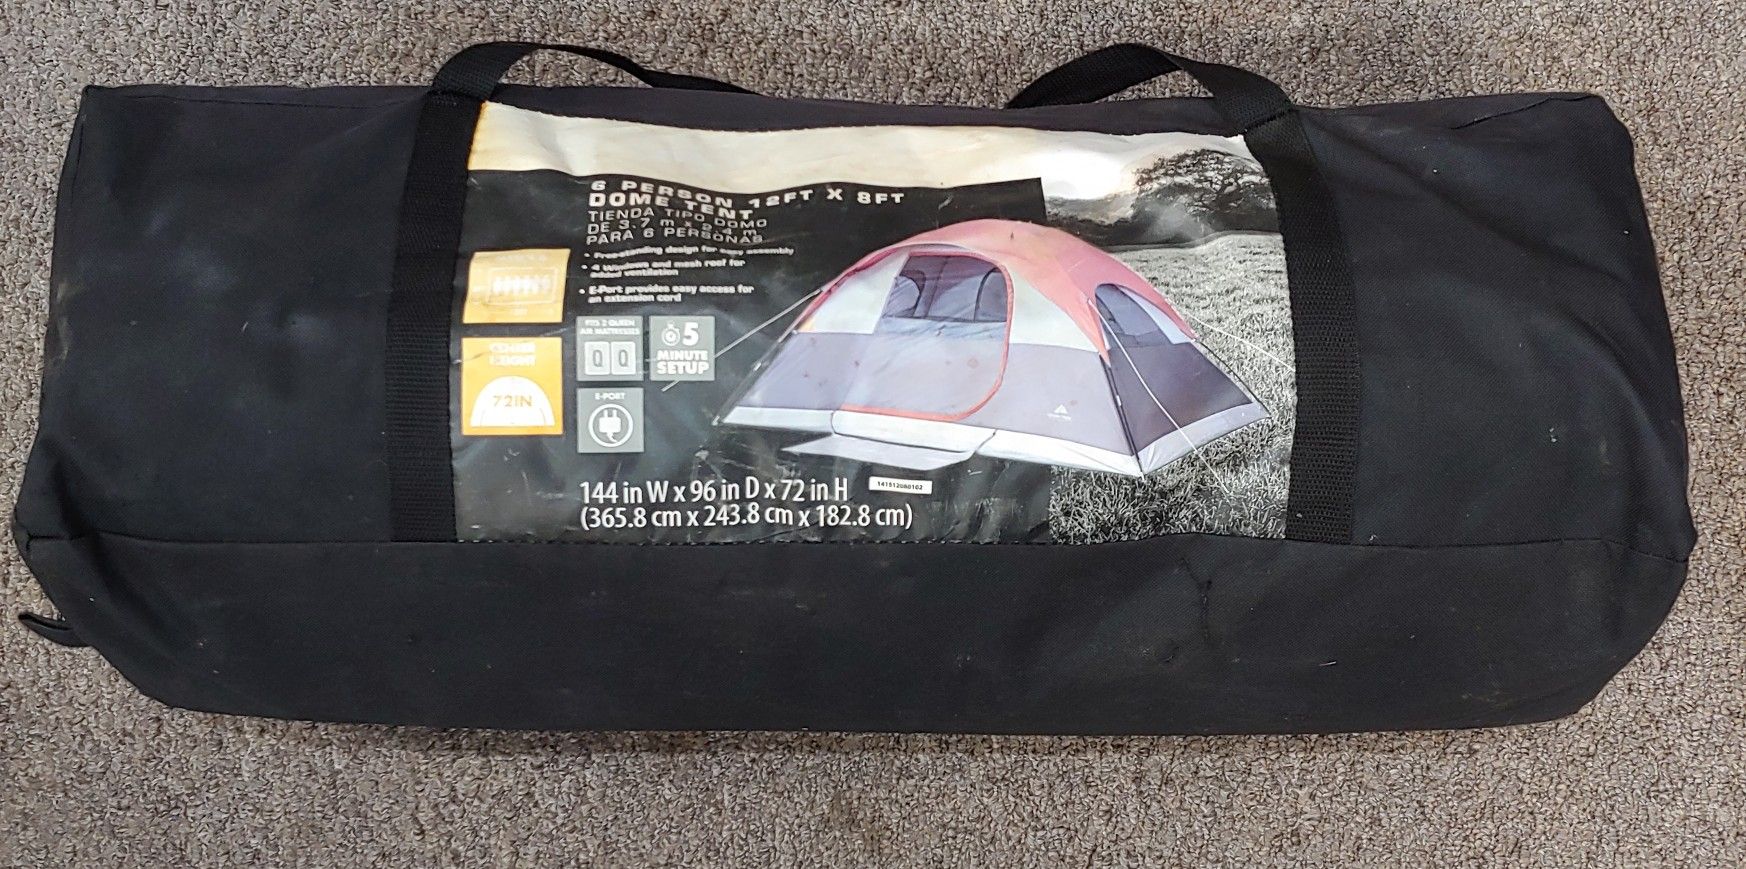 6 Person Dome Tent Fits 2 Queen Air Mattresses, 5 Minute Set Up